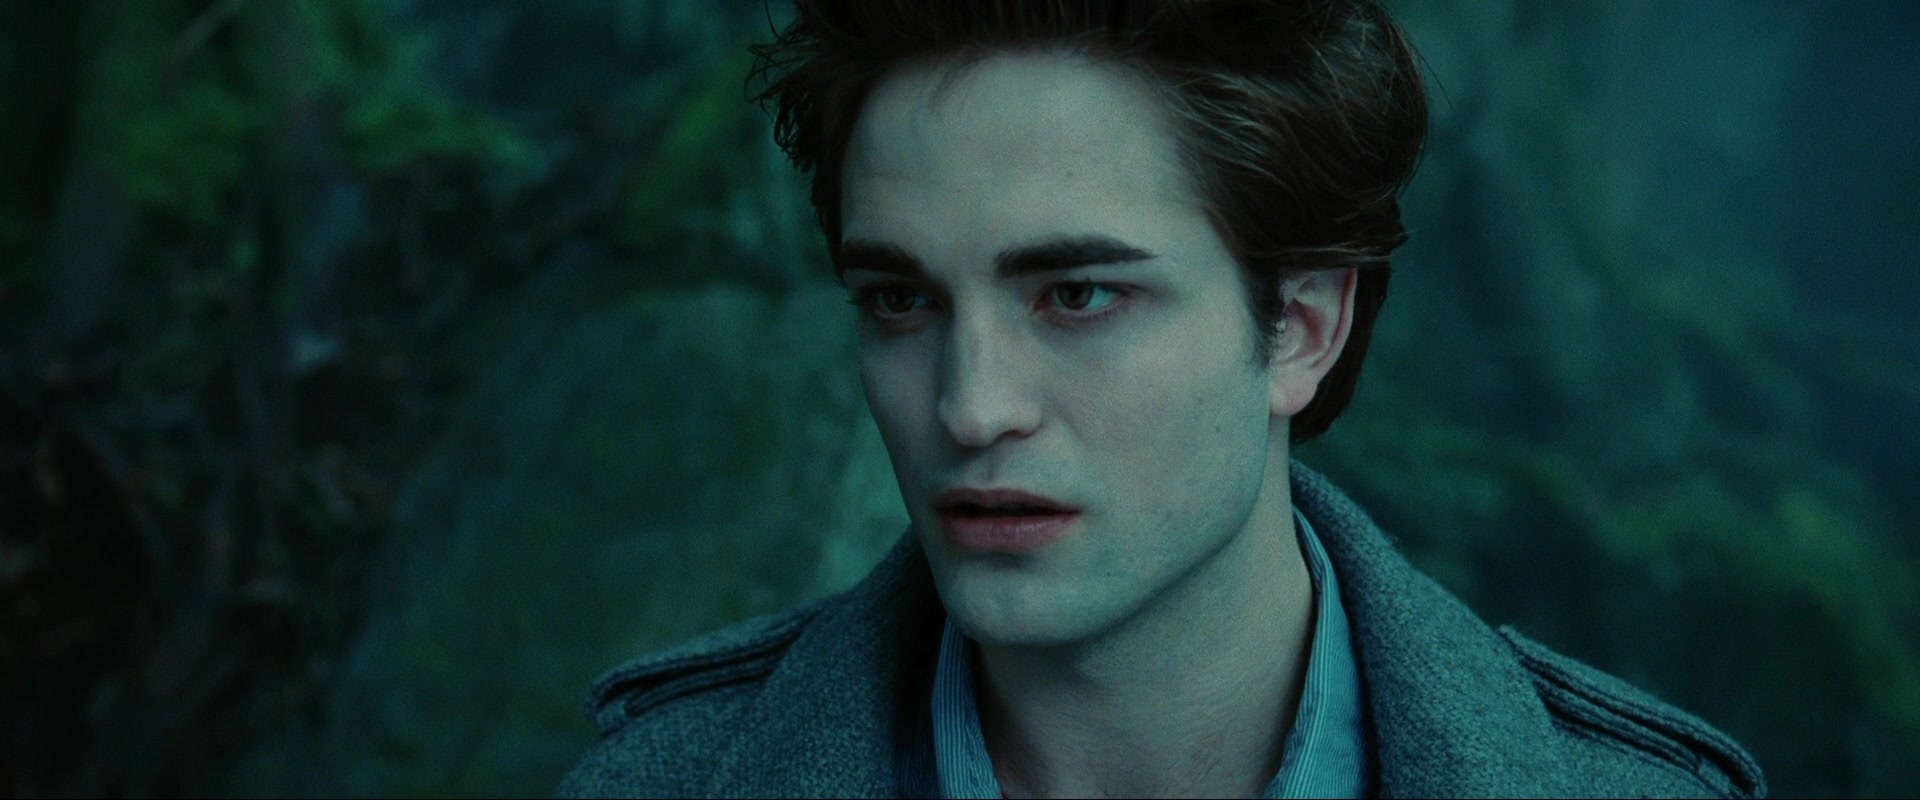 Robert Pattinson Image Twilight Full HD Wallpaper